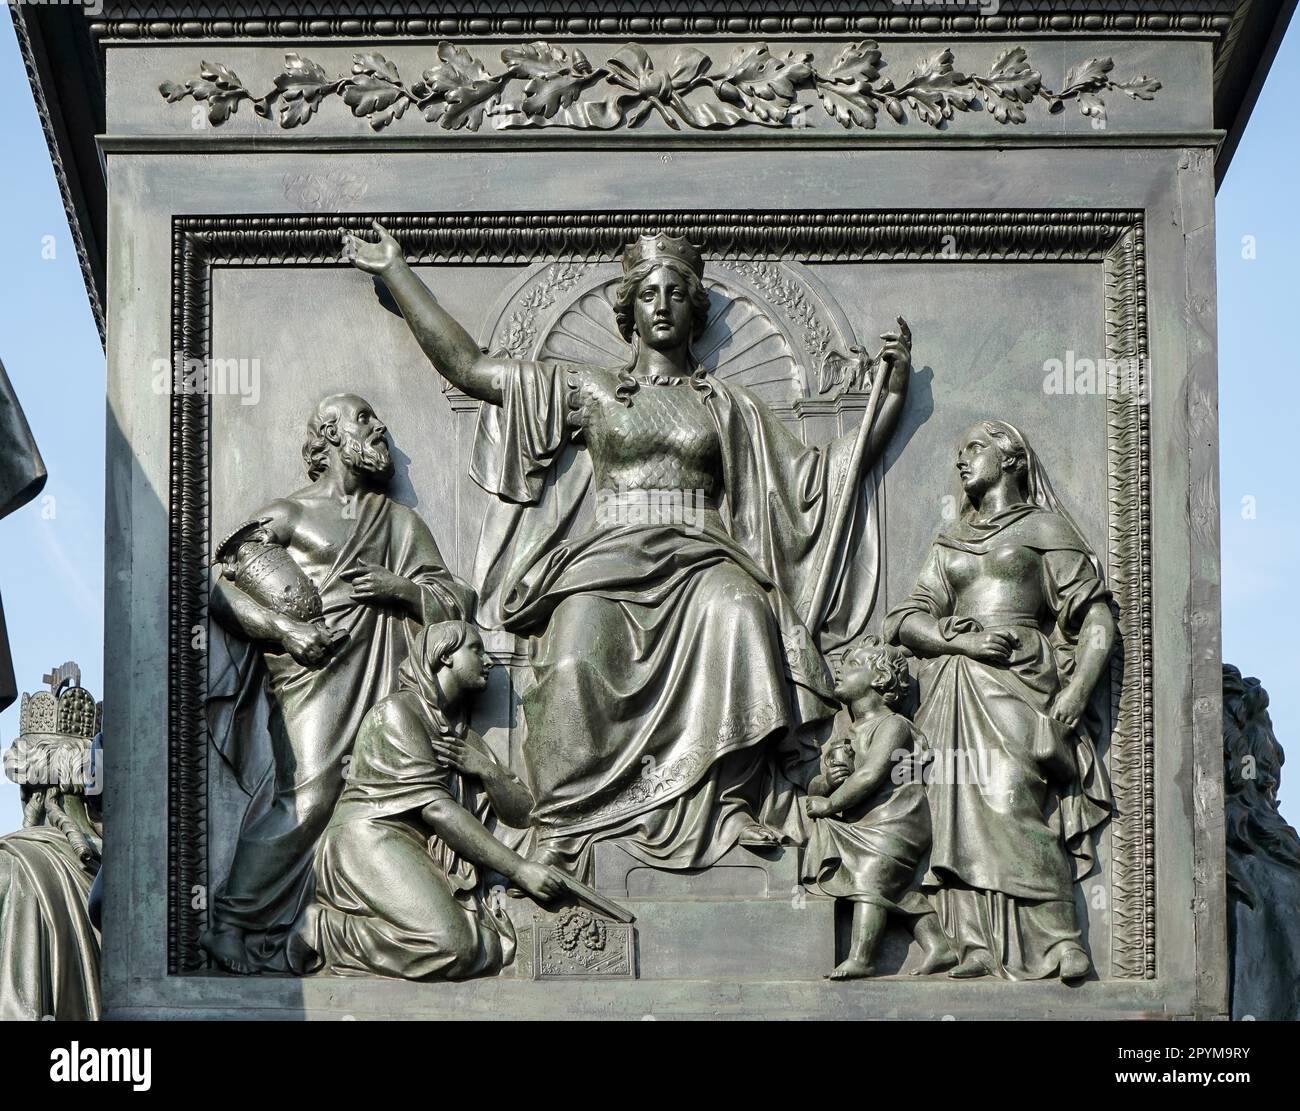 Detail from the monument to Baron Freiherr von Stein in front of the Abgeordnetenhaus in Berlin Stock Photo